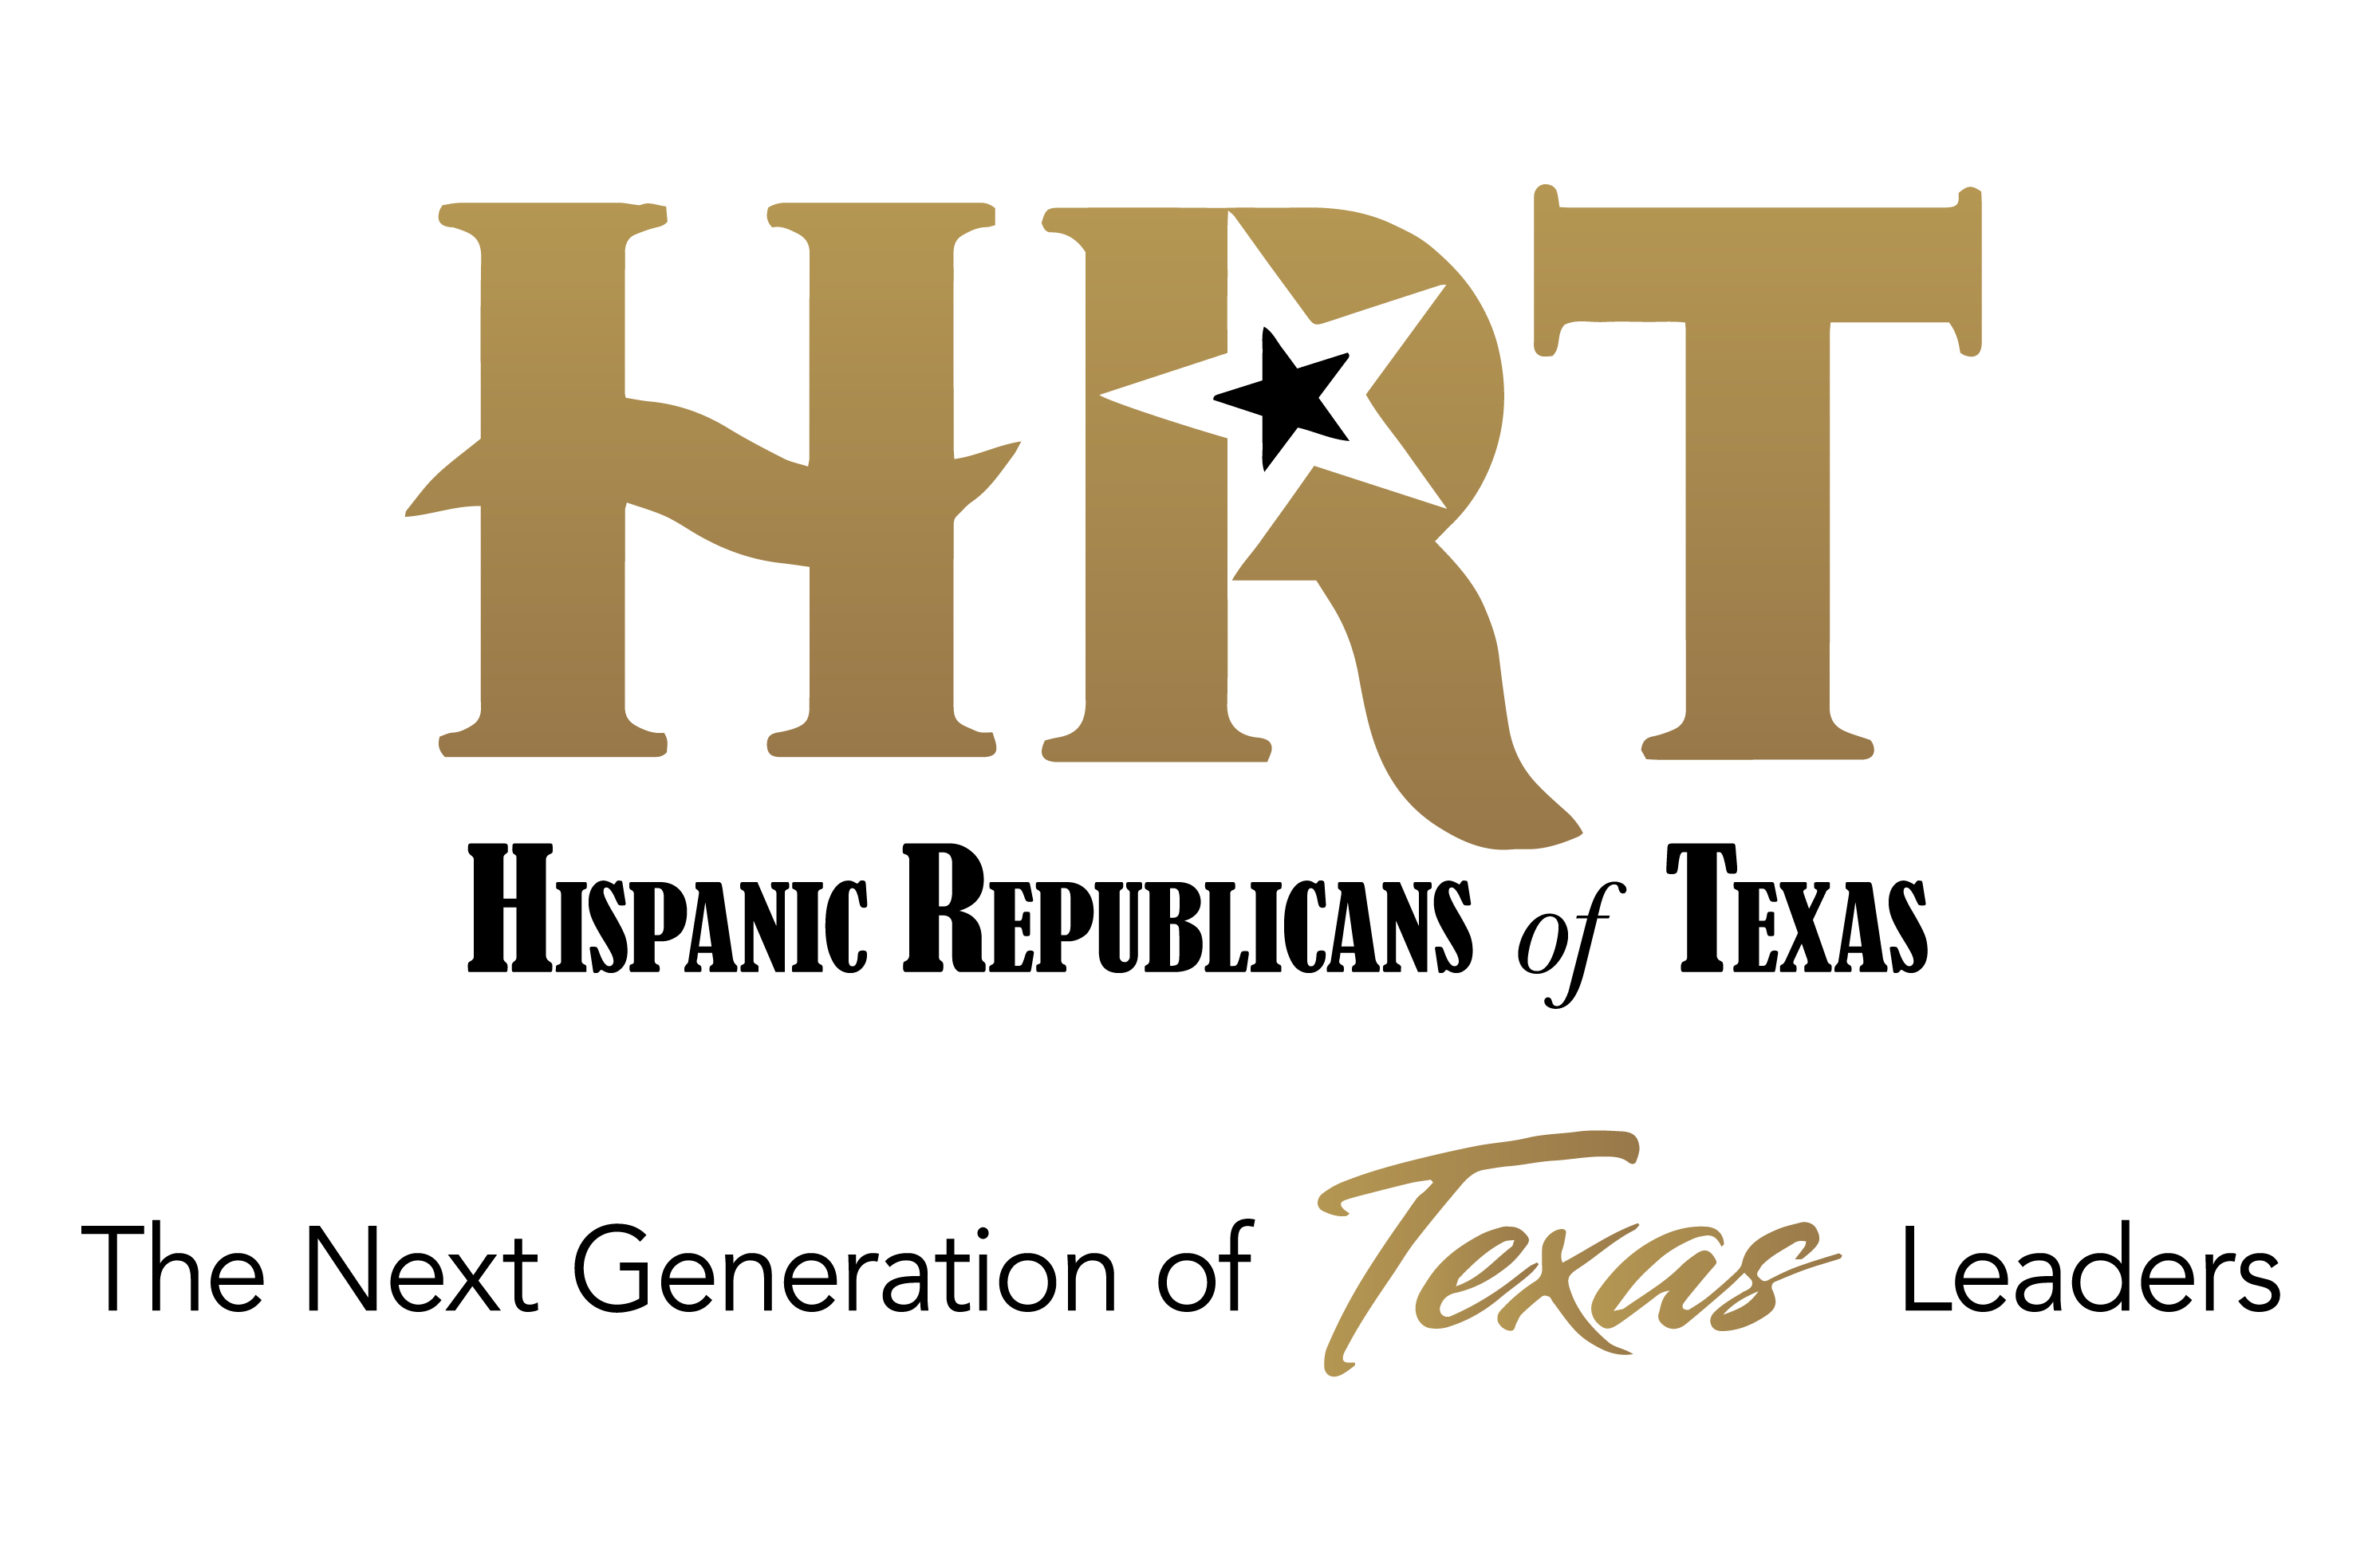 Hispanic Republicans of Texas Logo